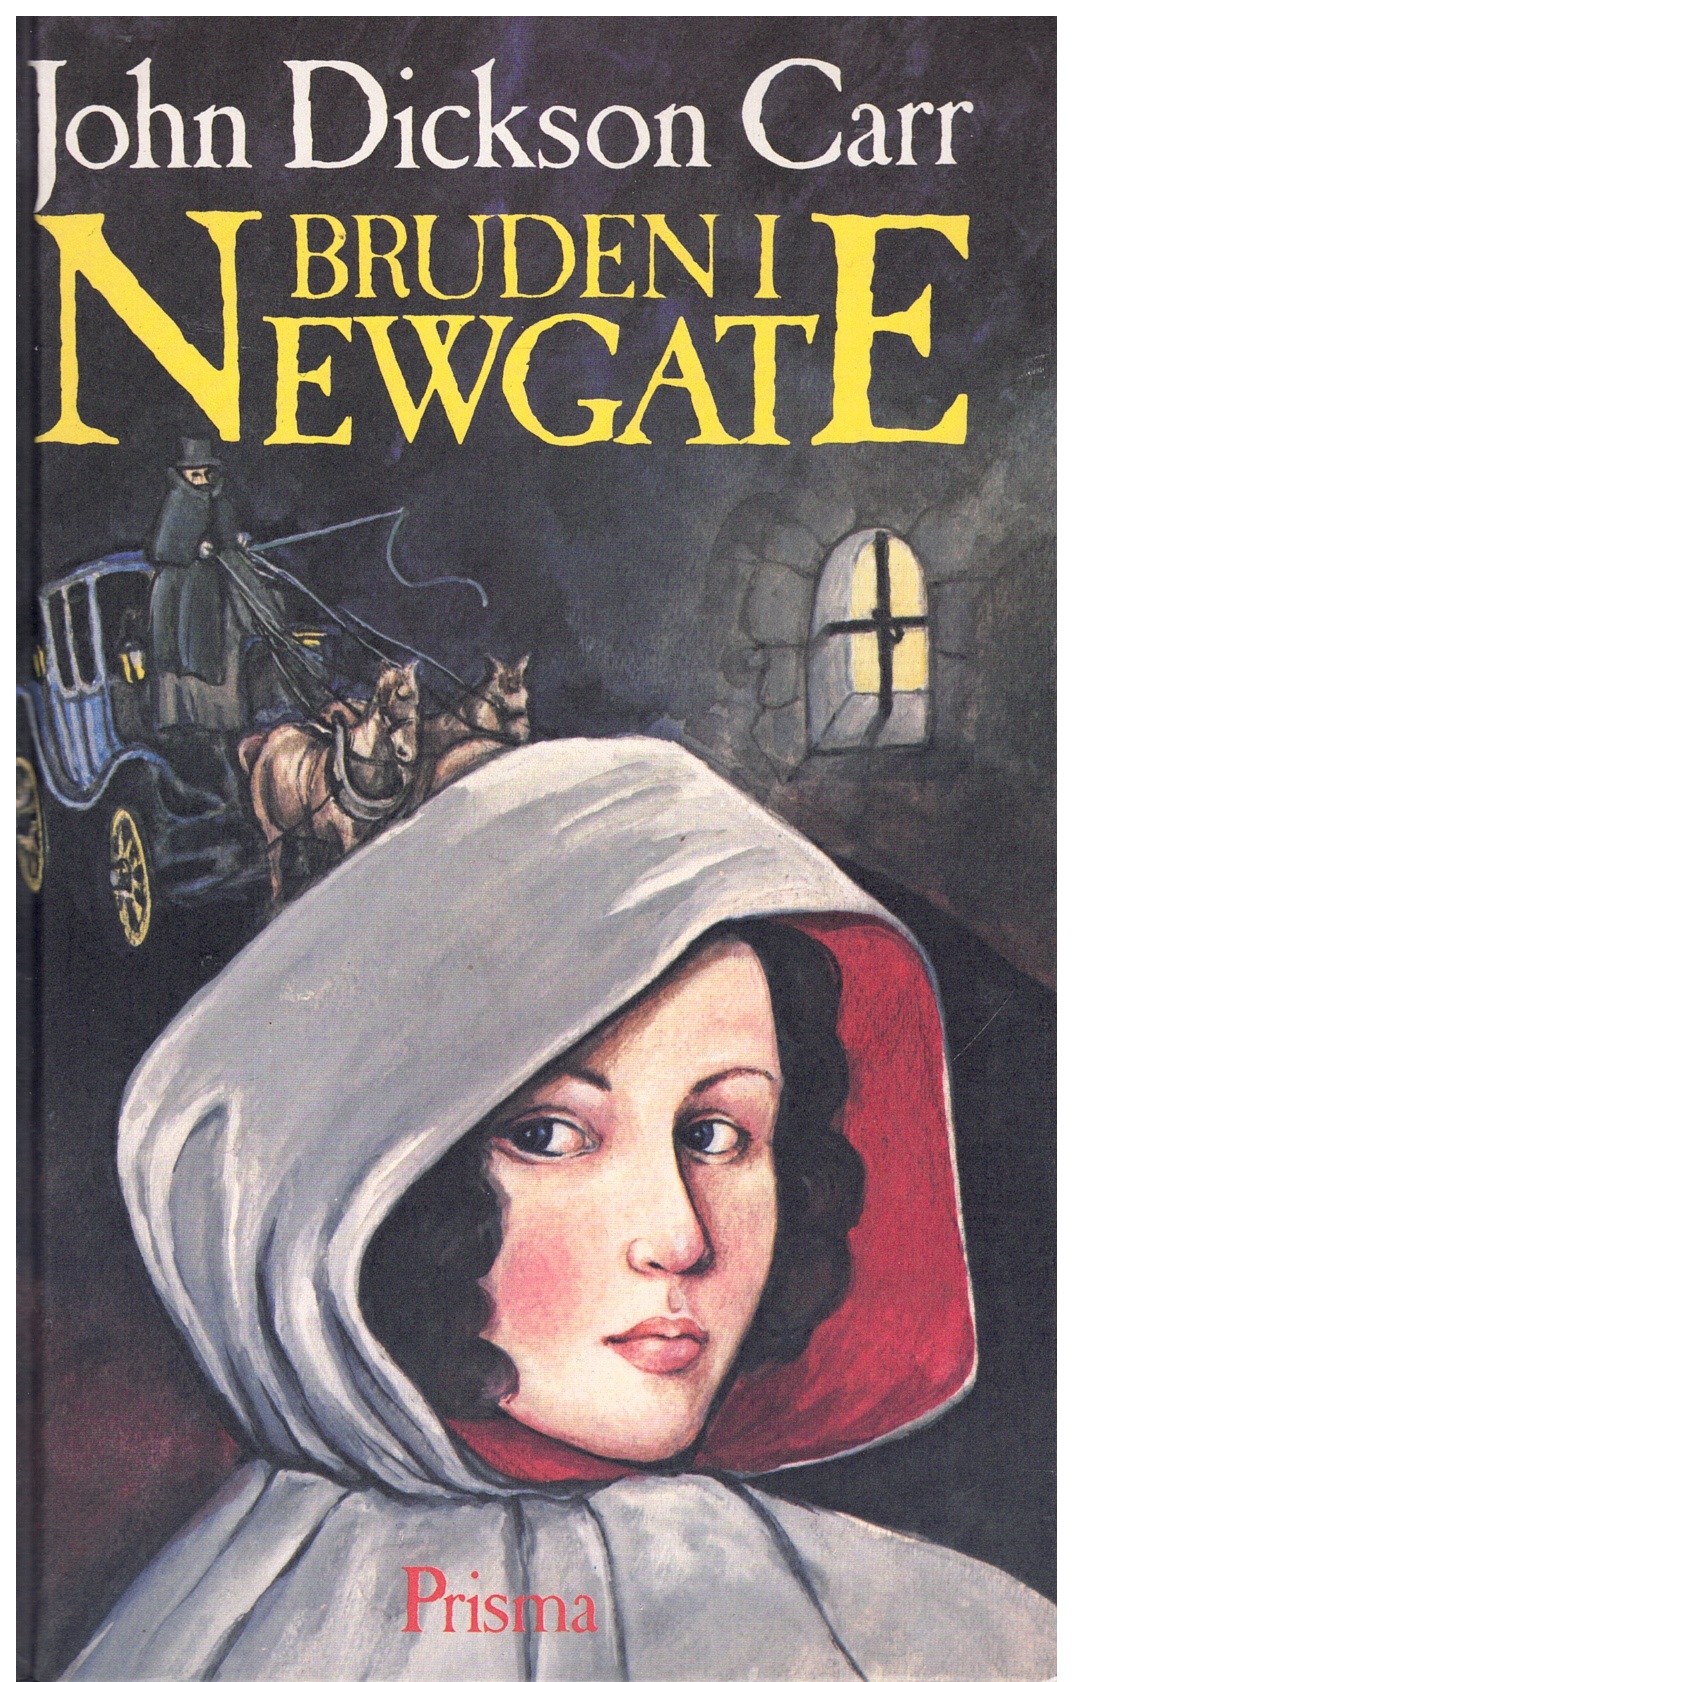 Bruden i Newgate - Carr, John Dickson